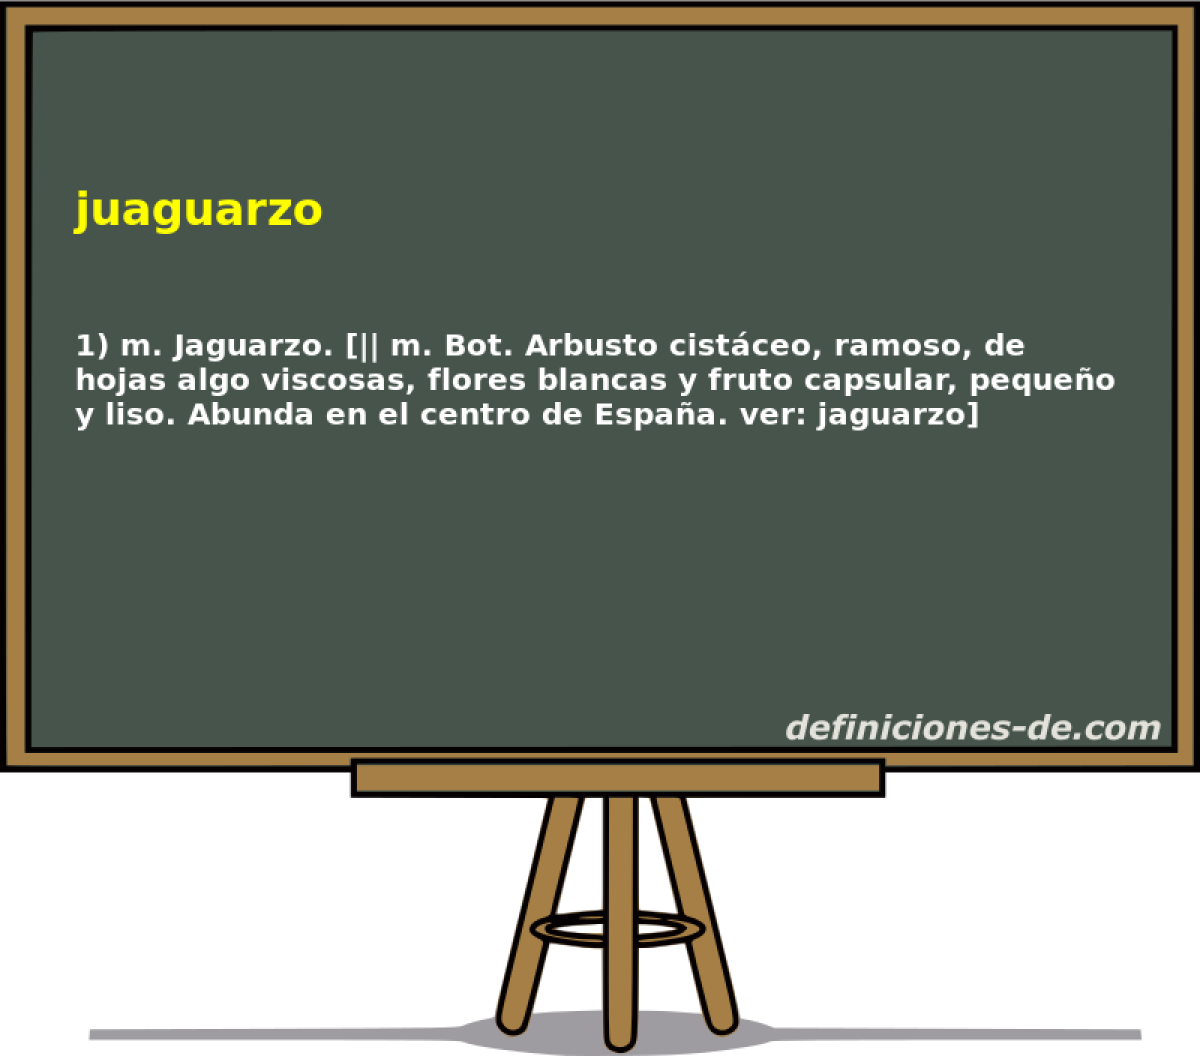 juaguarzo 